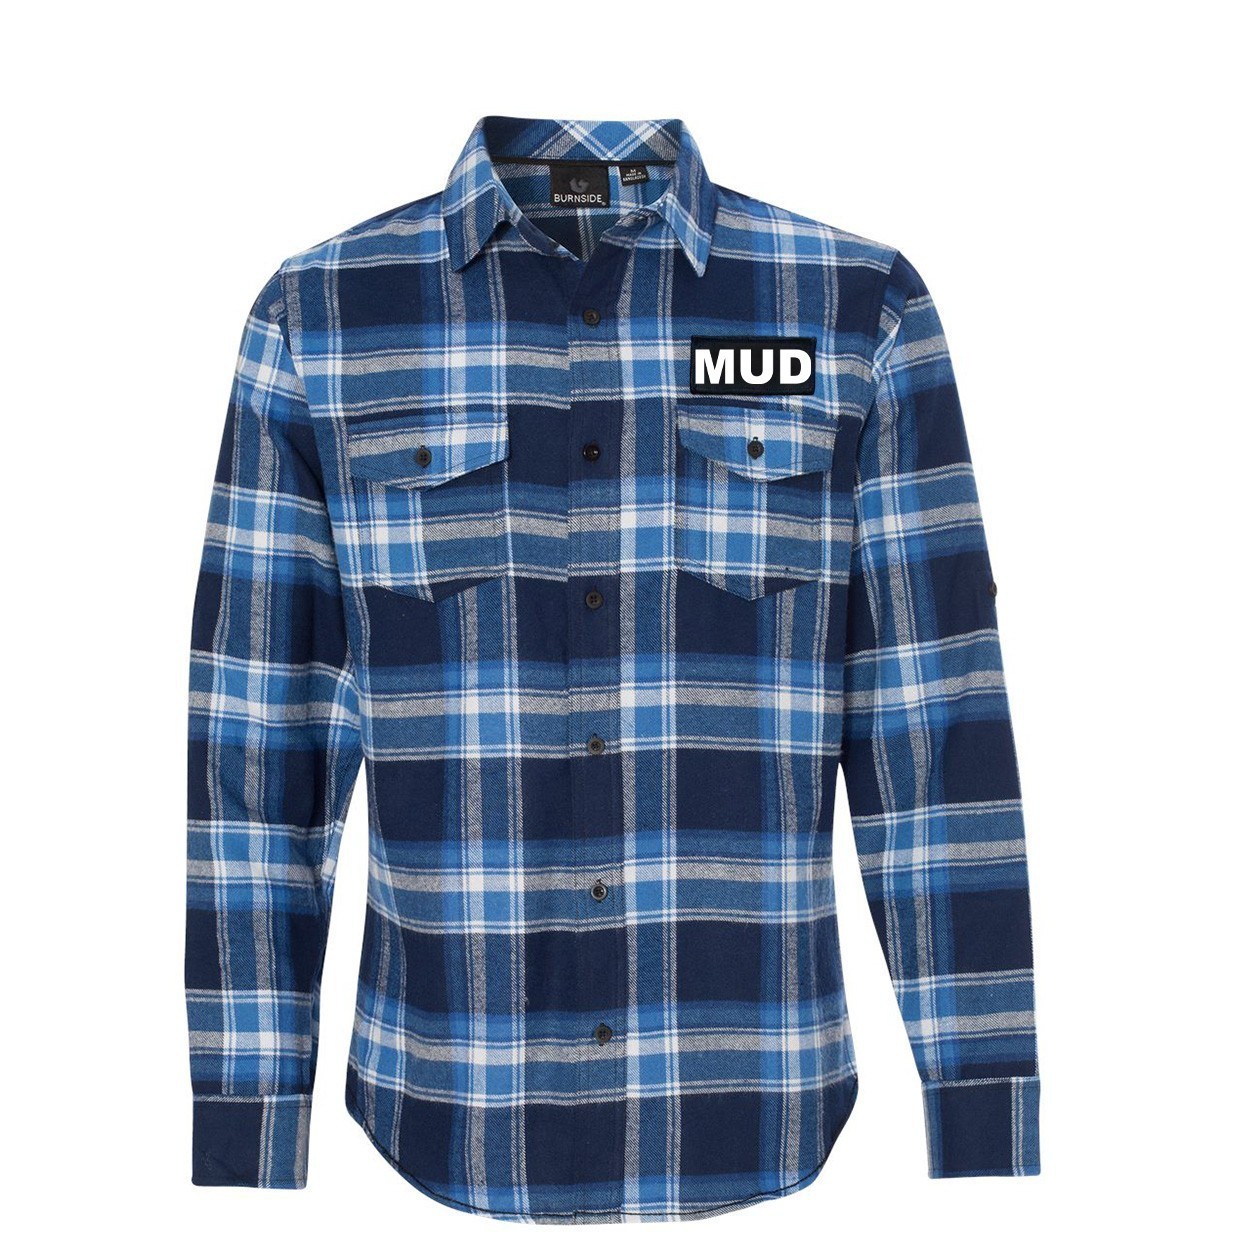 Mud Brand Logo Classic Unisex Long Sleeve Woven Patch Flannel Shirt Blue/White (White Logo)